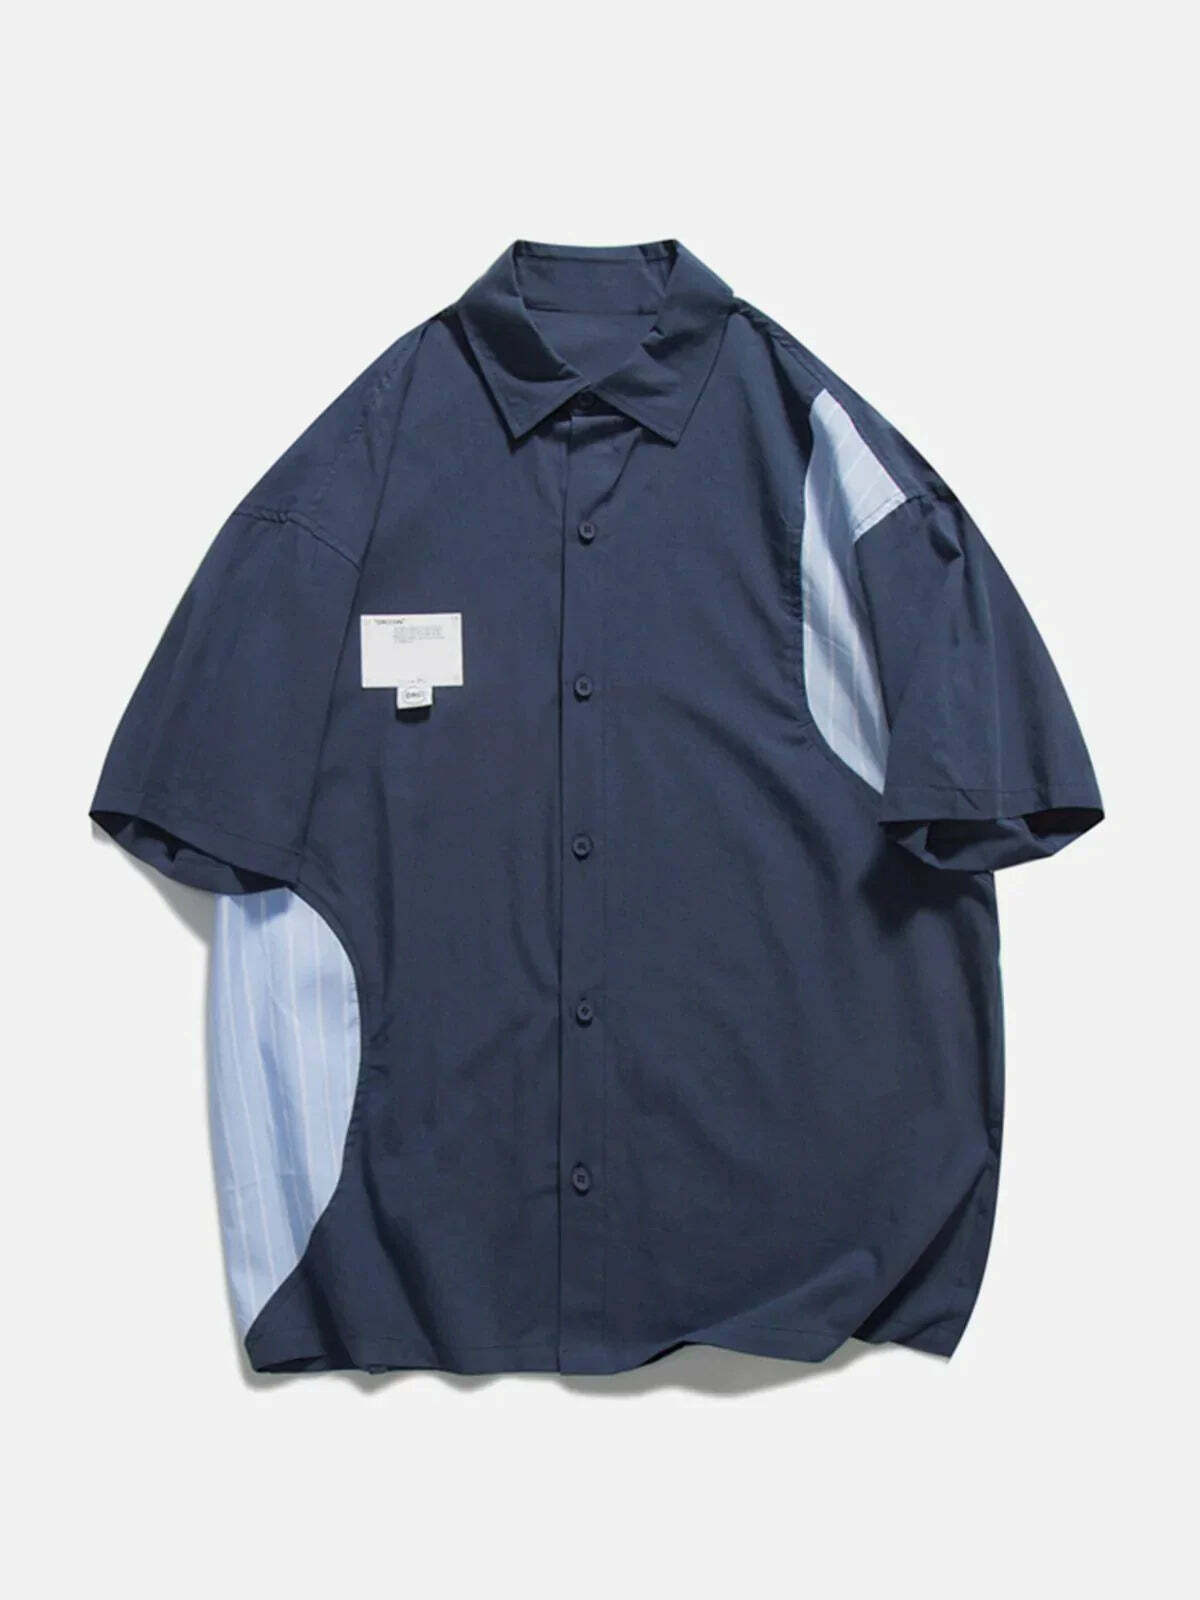 panel stripe short sleeve shirt curved & retro urban essential 8086